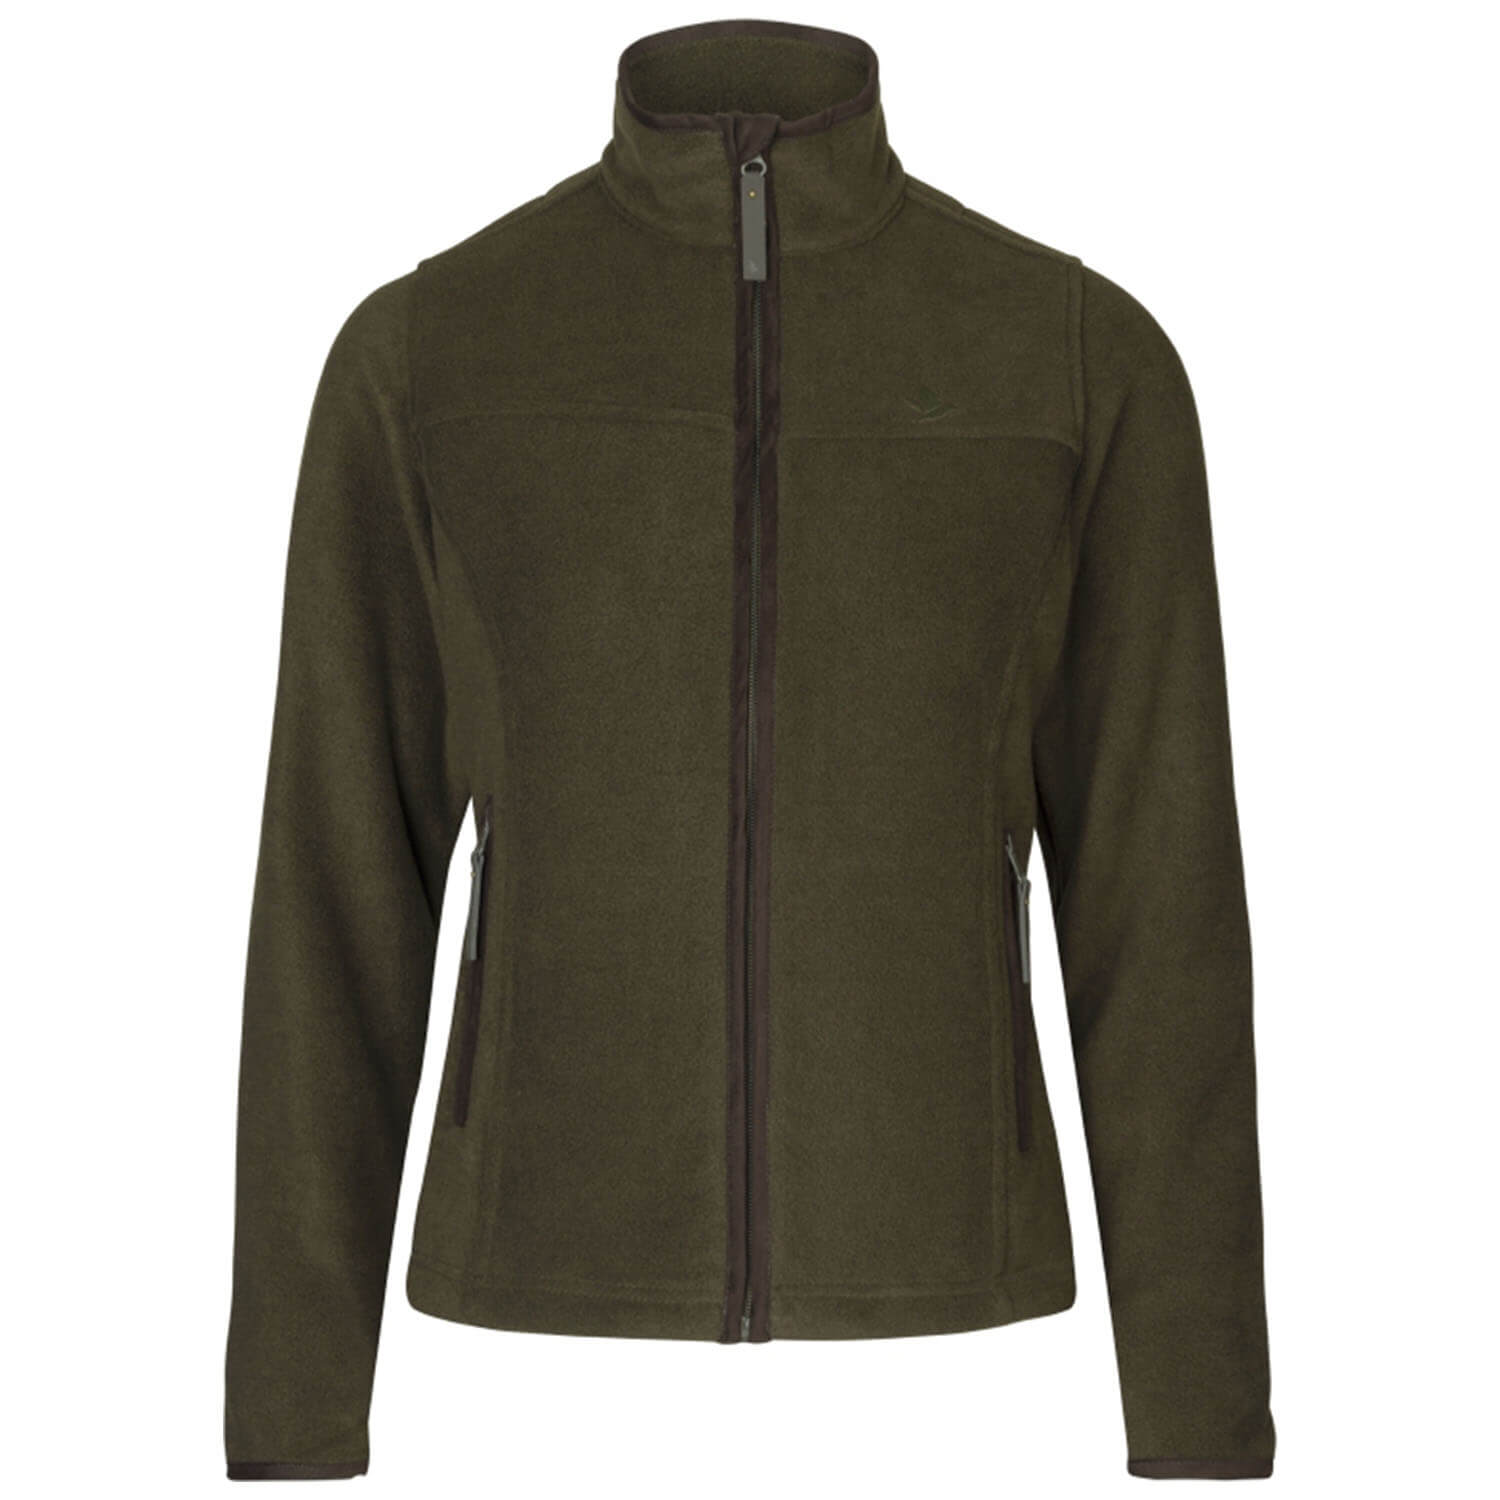  Seeland Women's jacket Woodcock Ivy (Pine Green Melange) - Hunting Jackets